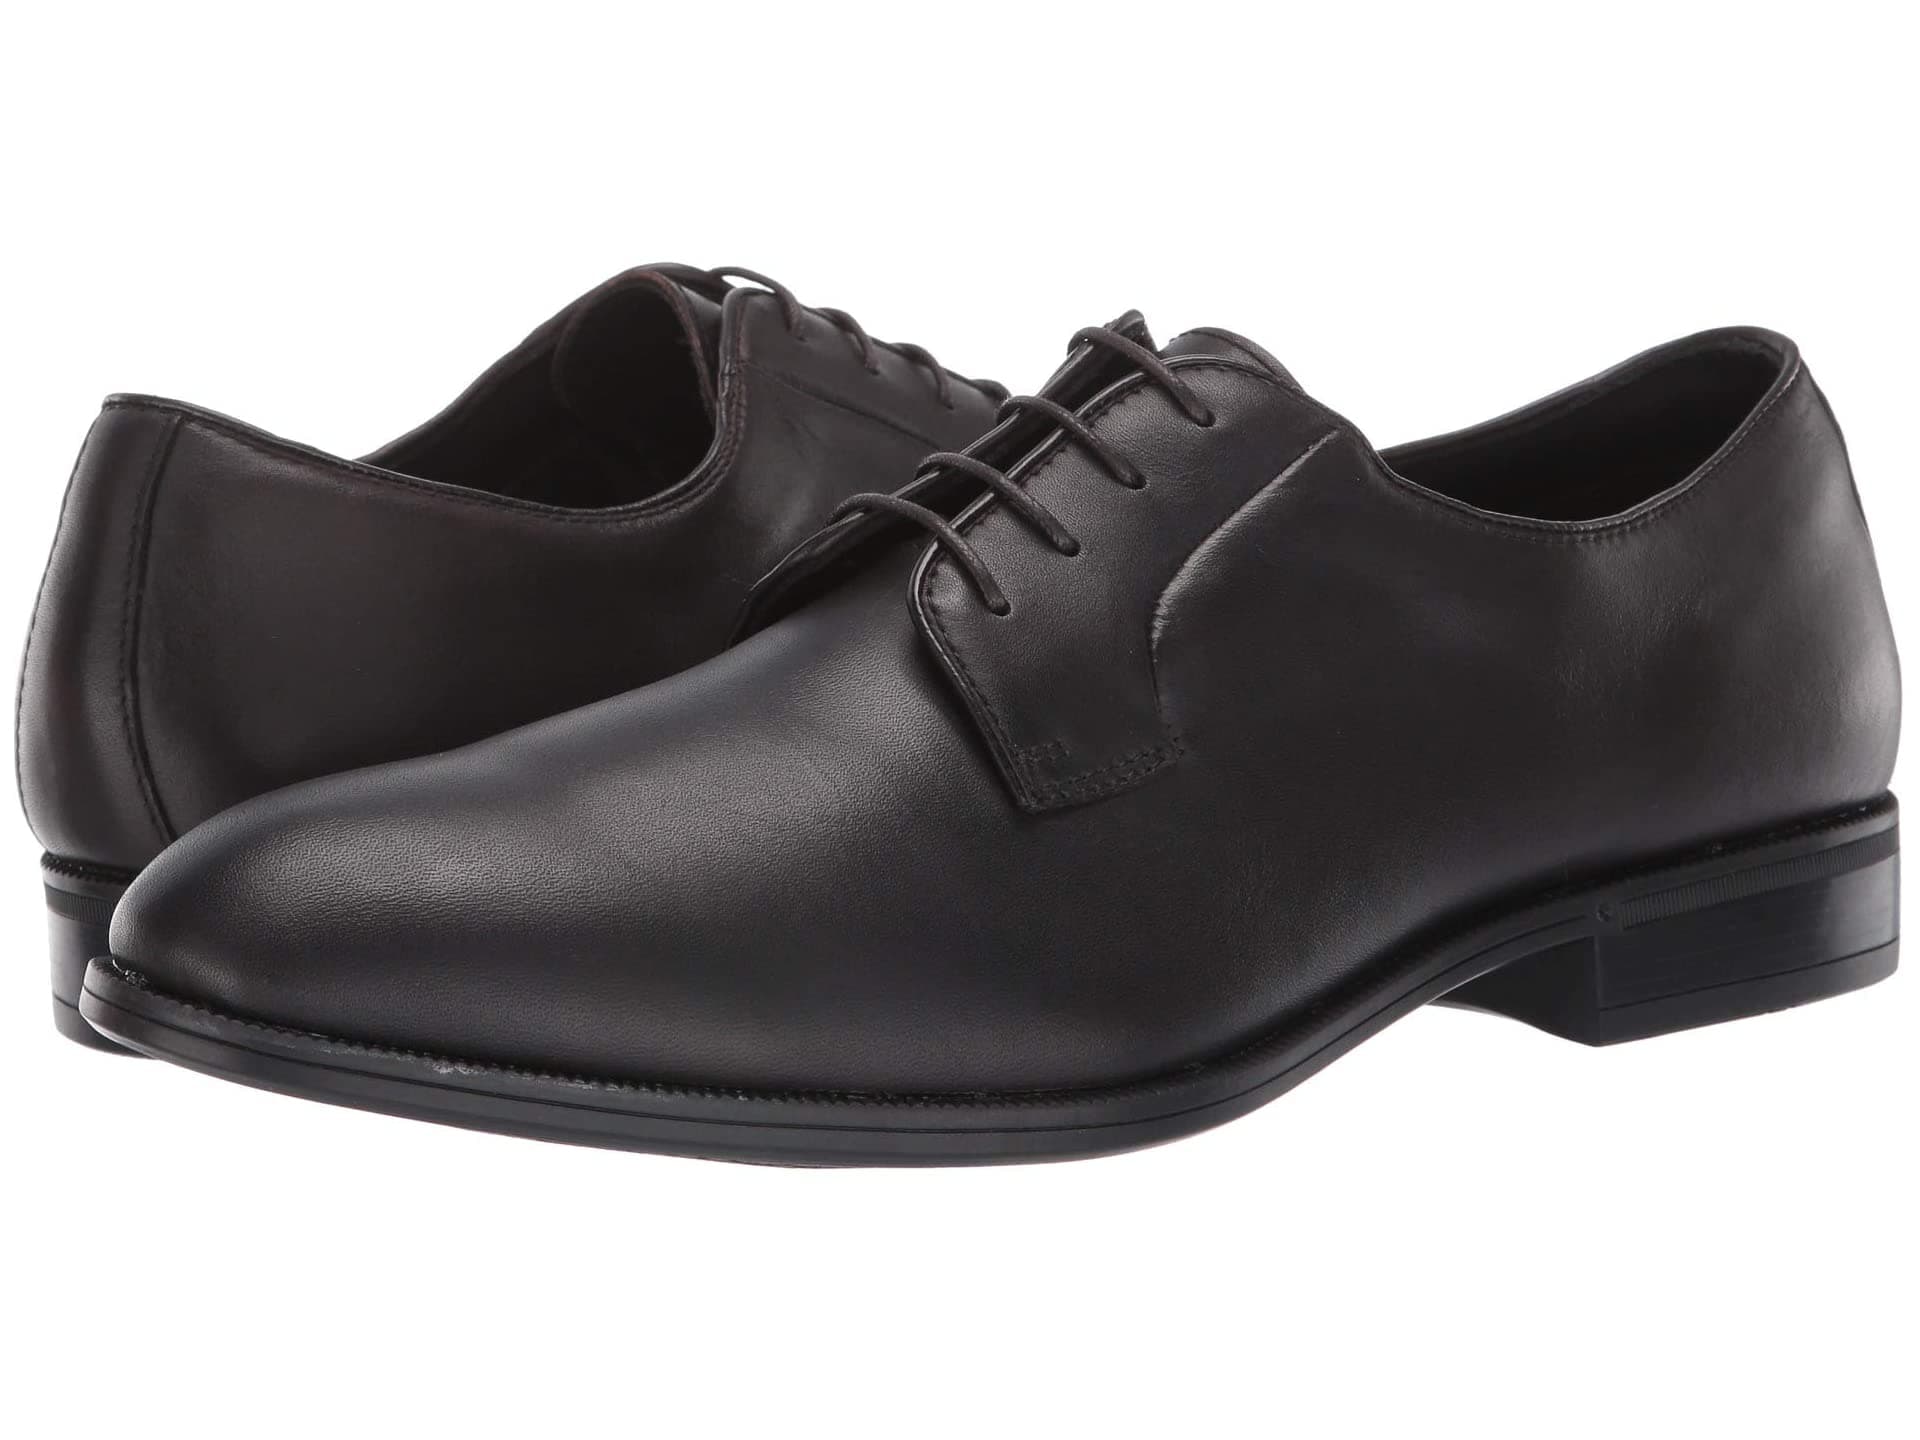 woocommerce-673321-2209615.cloudwaysapps.com-gordon-rush-mens-black-leather-bailey-plain-toe-oxfords-shoes